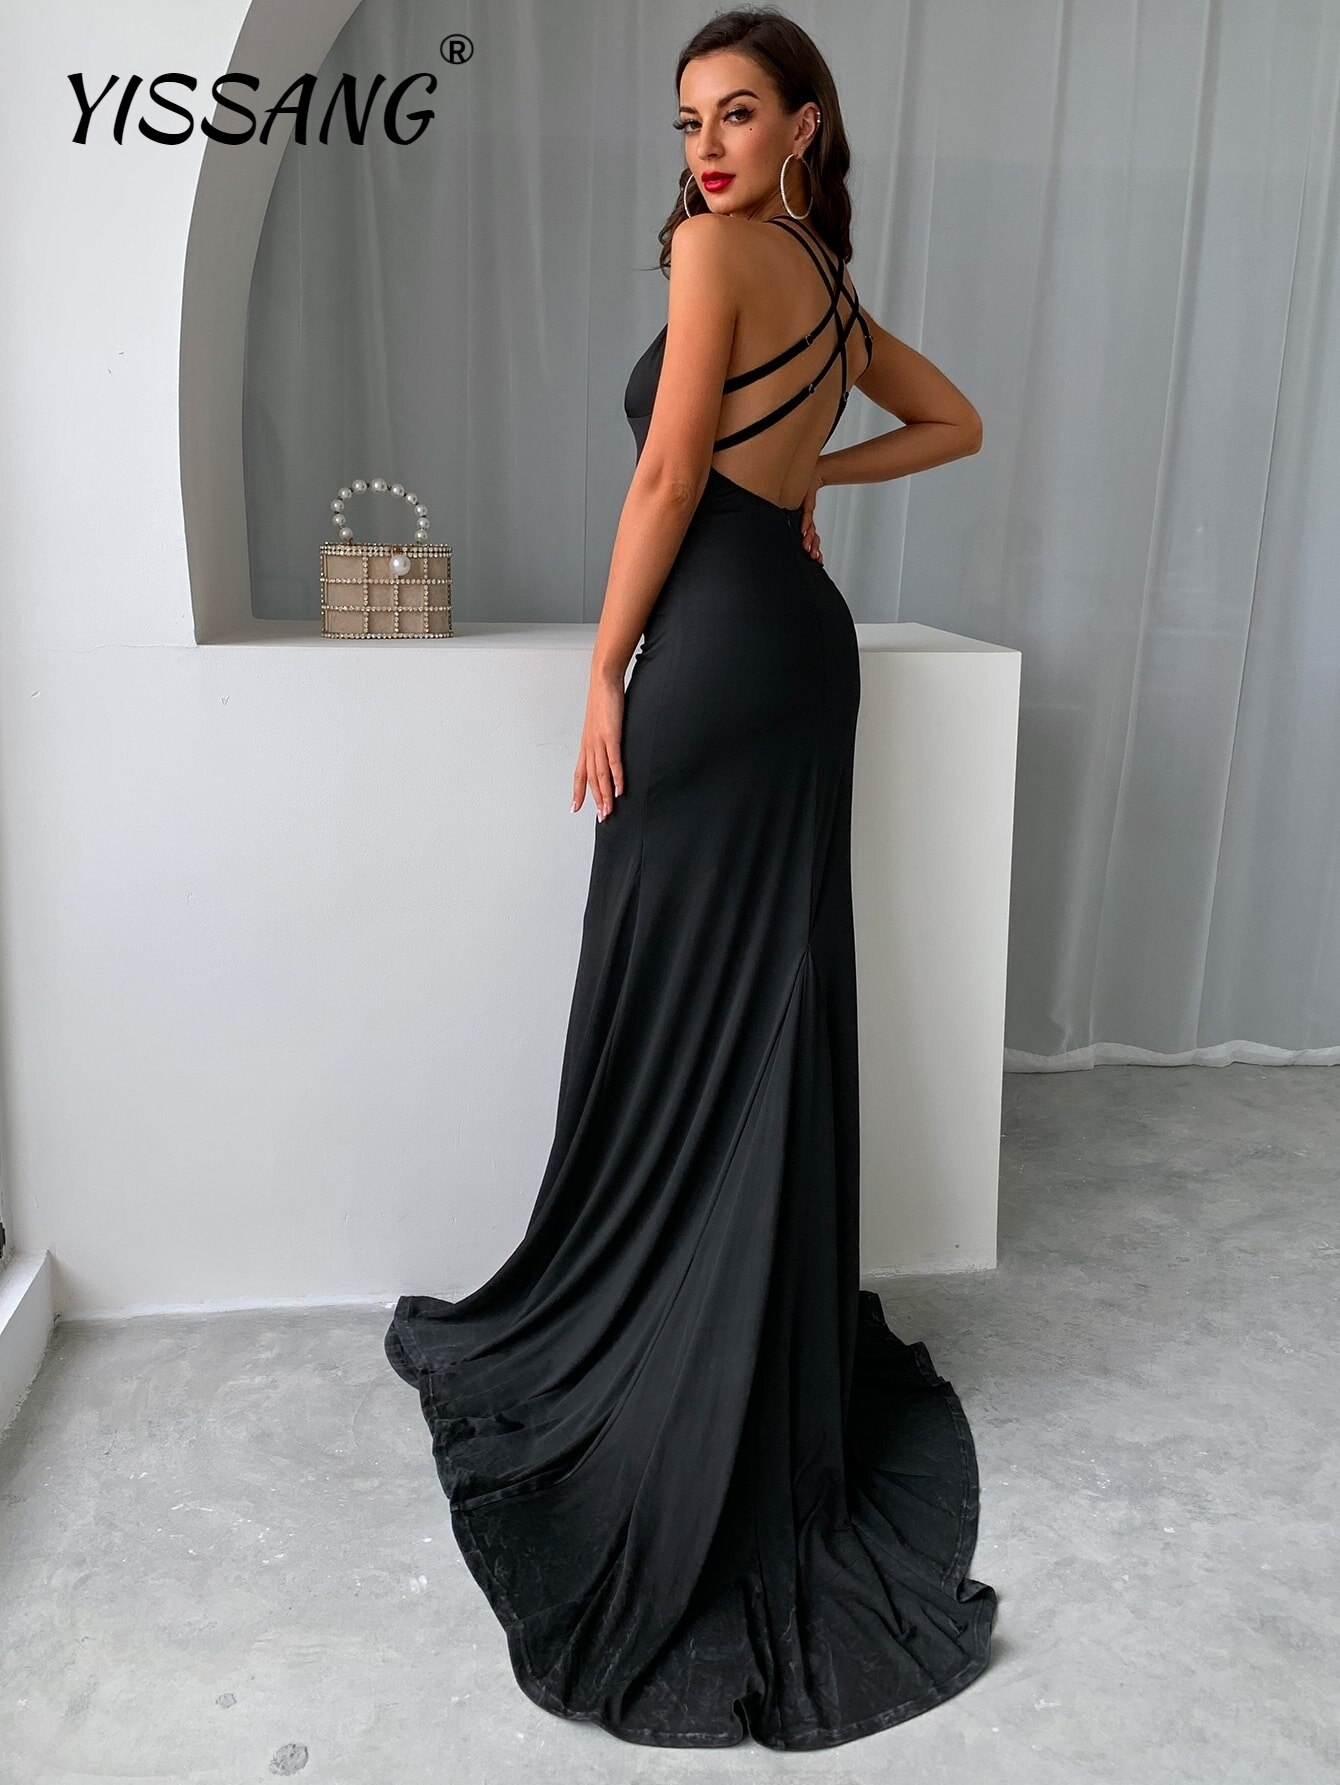 Yissang-Black-Suspender-Long-Dress-Backless-Split-Fishtail-Skirt-Cocktail-Prom-Long-Dress-Elegant-Lady-Party-1